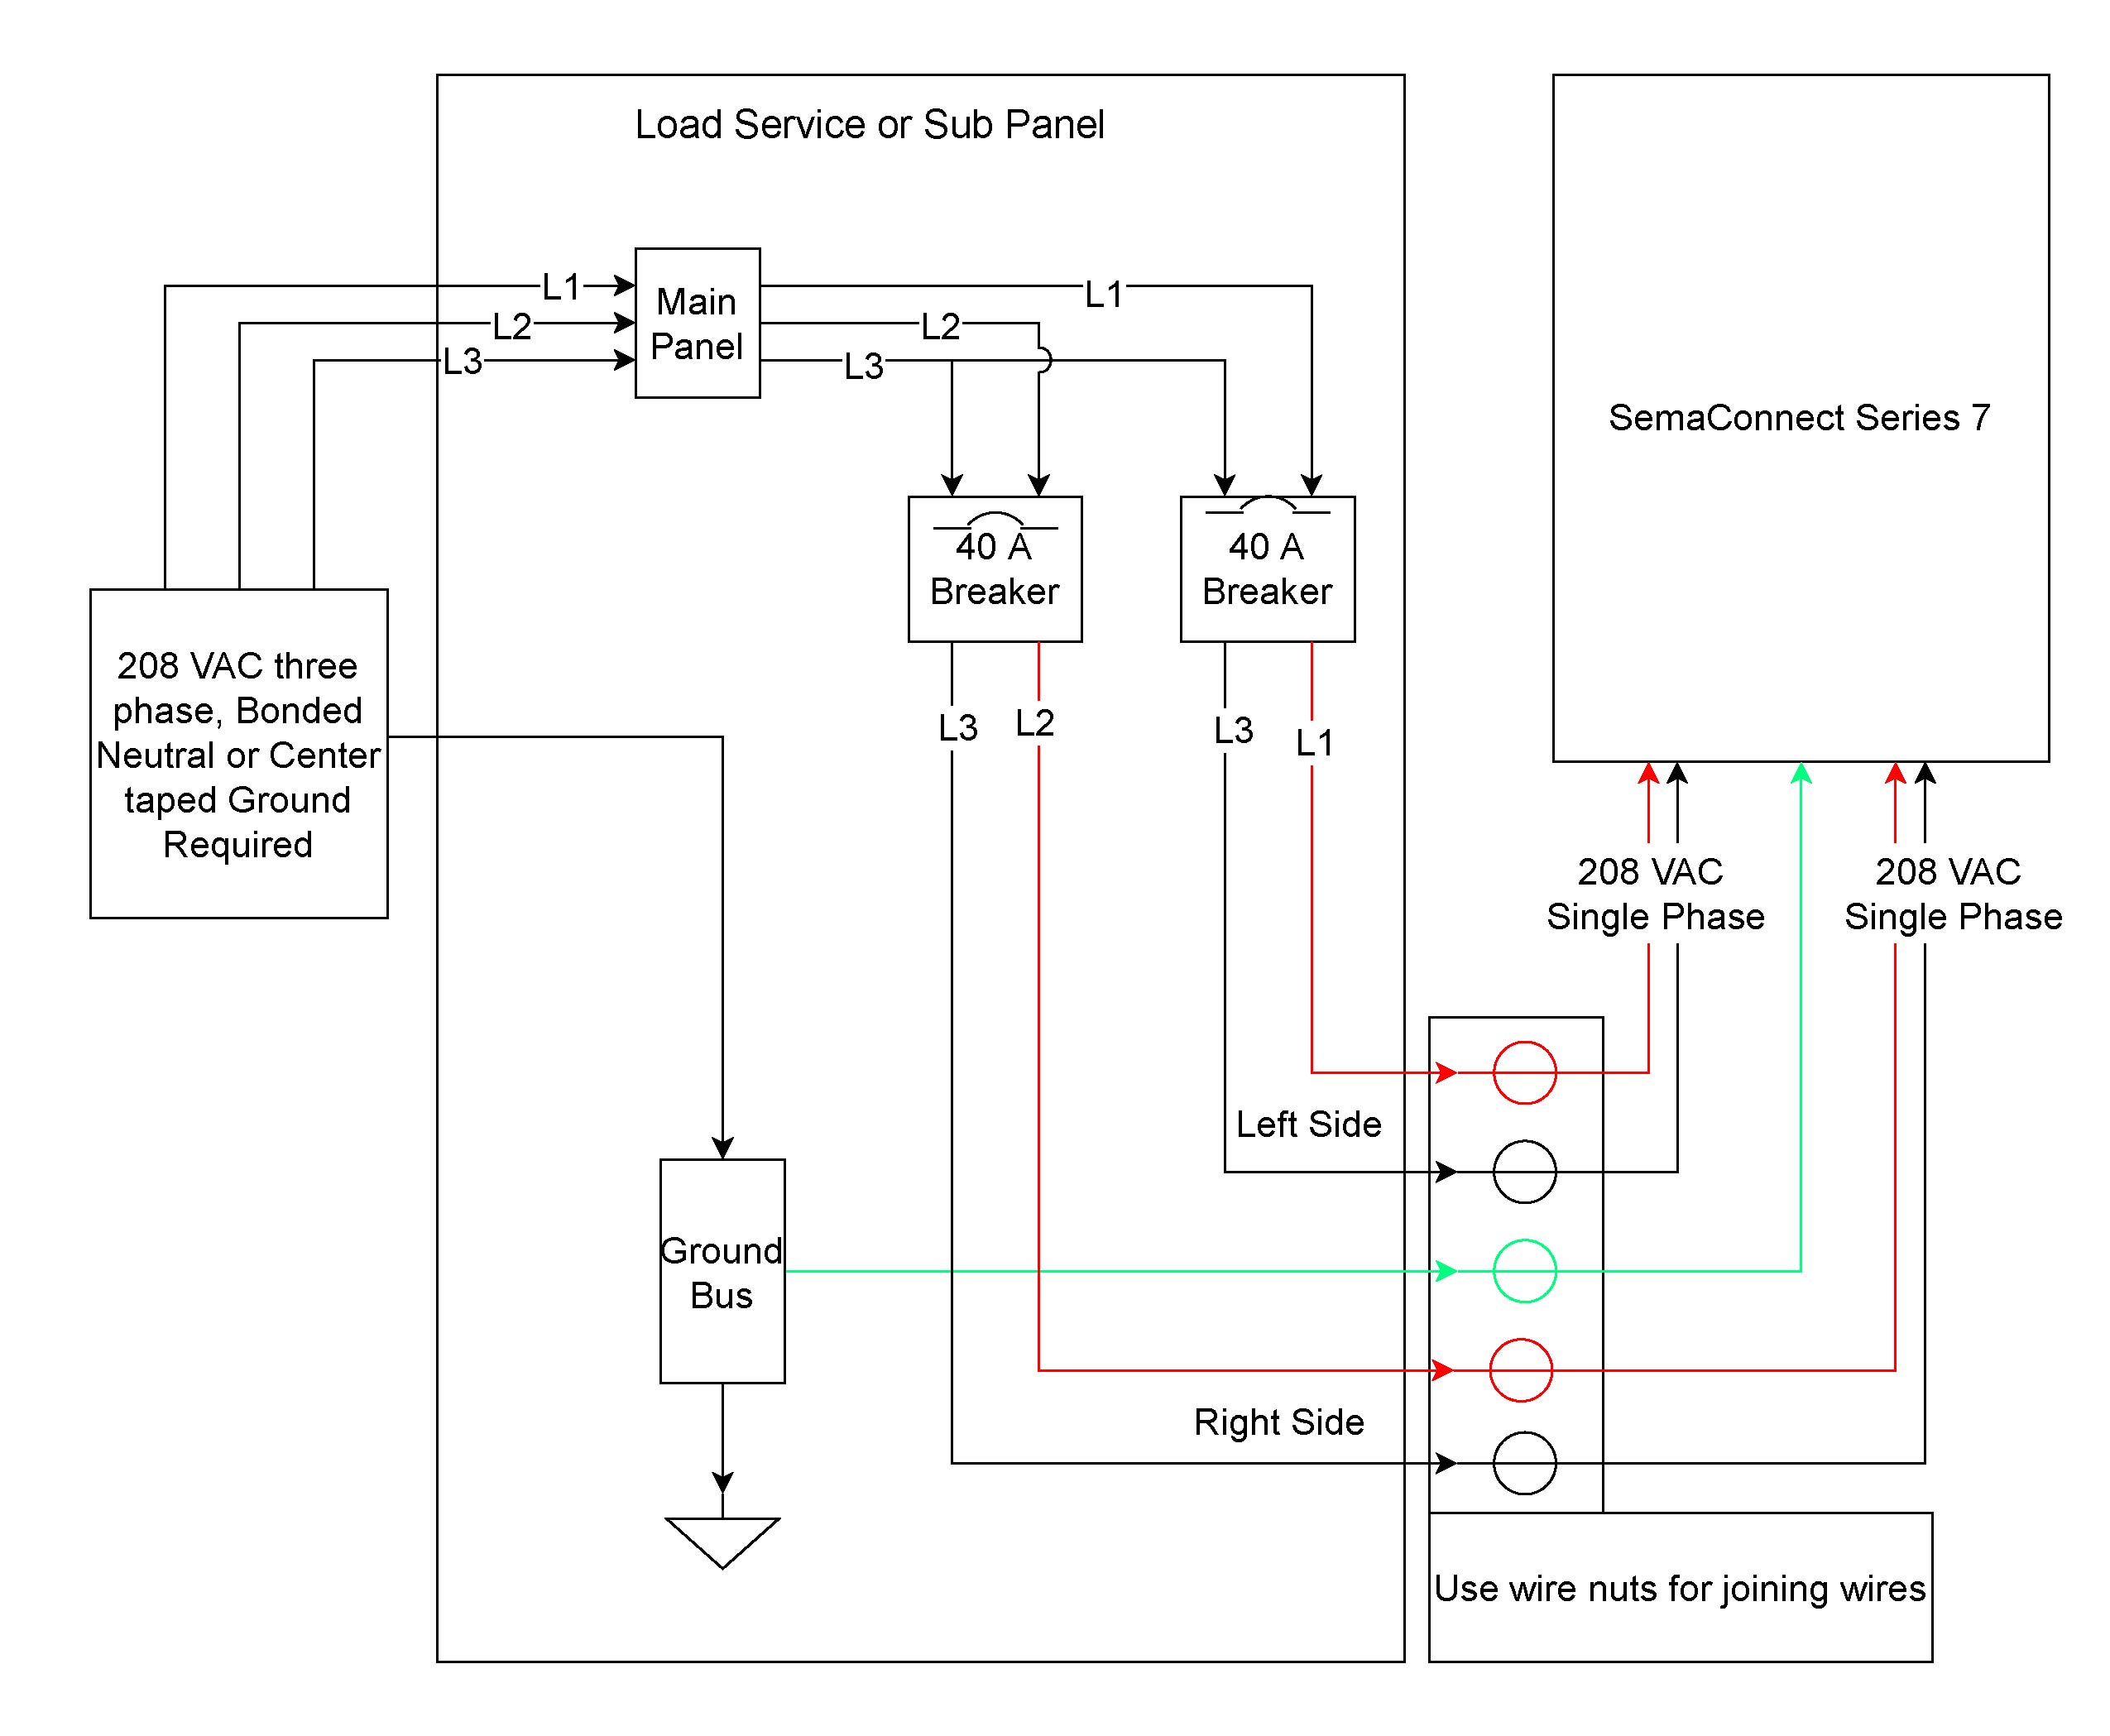 hbl2321 wiring diagram